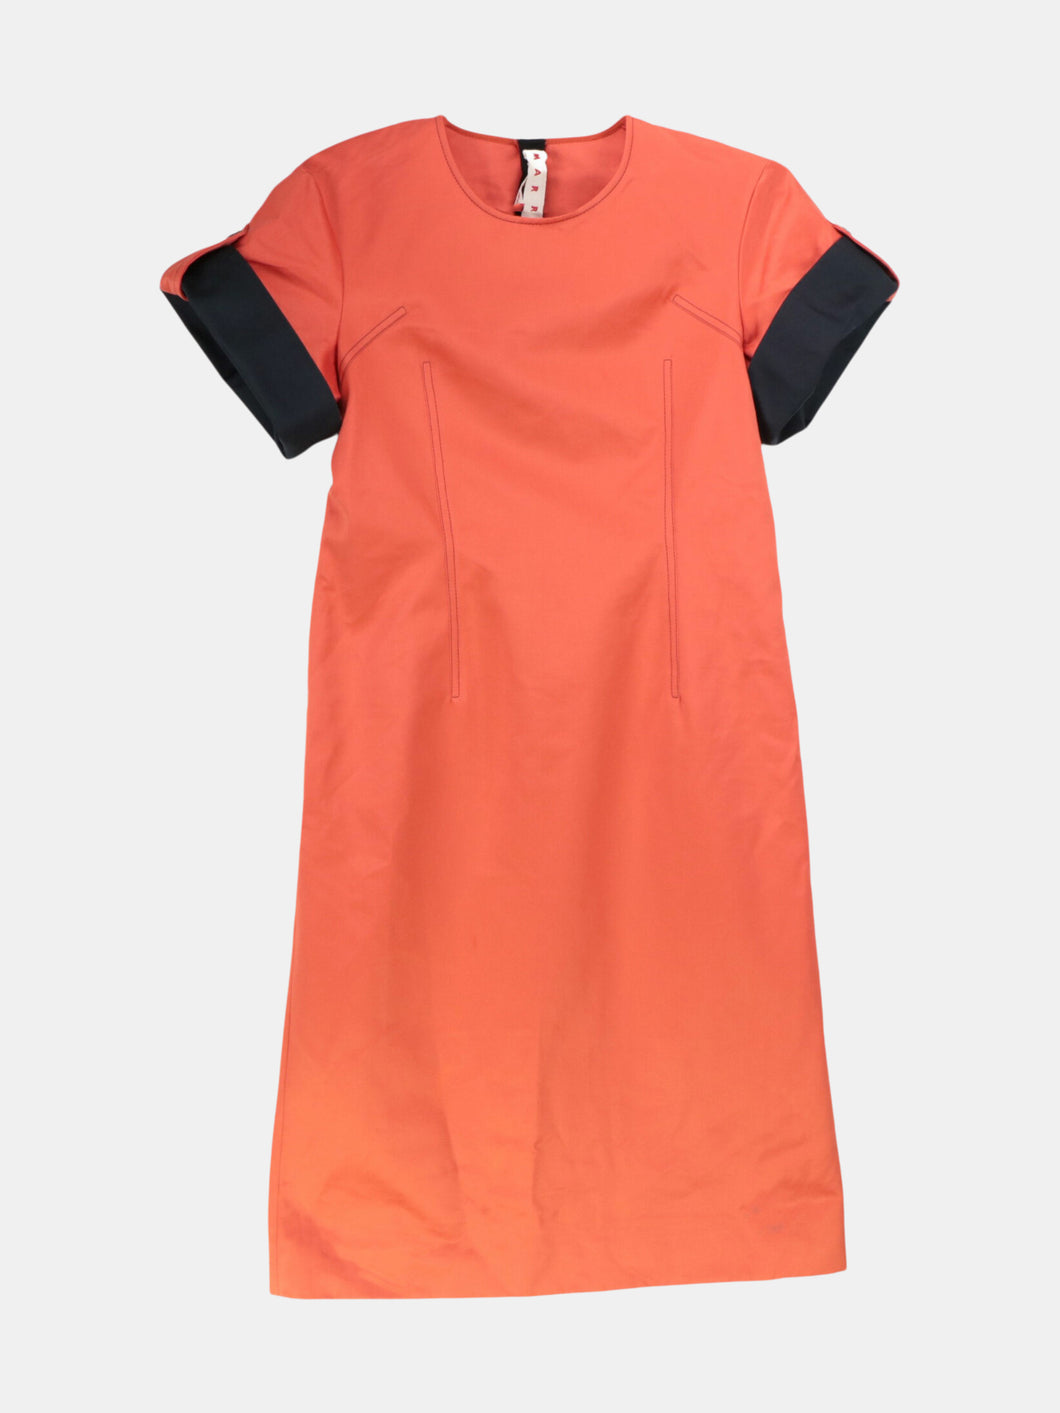 Marni Women's Orange / Black Arabesque Dress - 8 US 44 EU